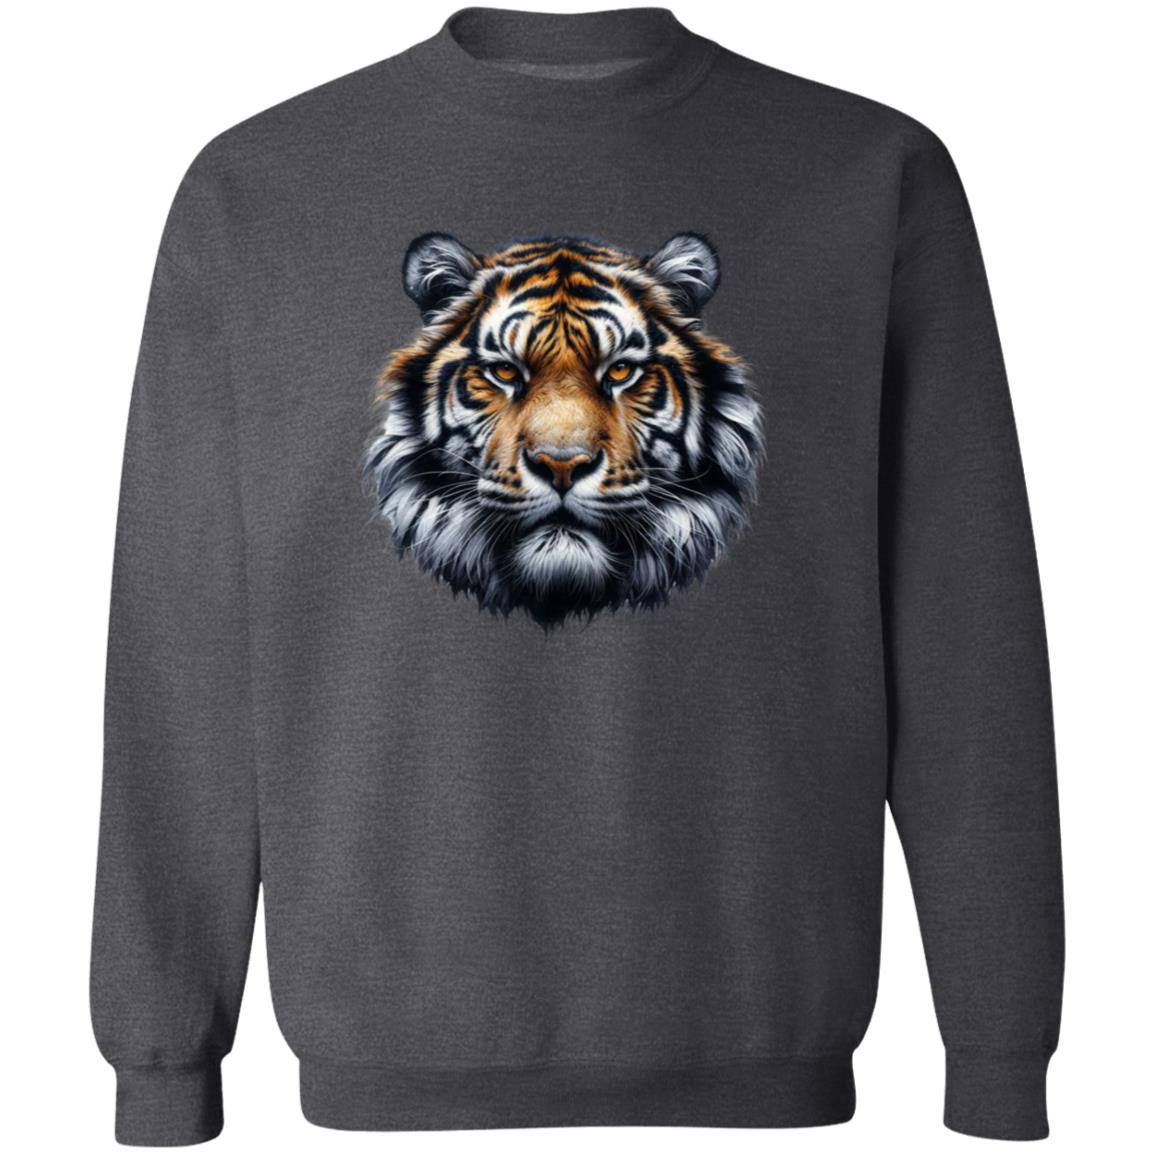 Strong Spirit Tiger Unisex Sweatshirt Black Navy Dark Heather-Family-Gift-Planet